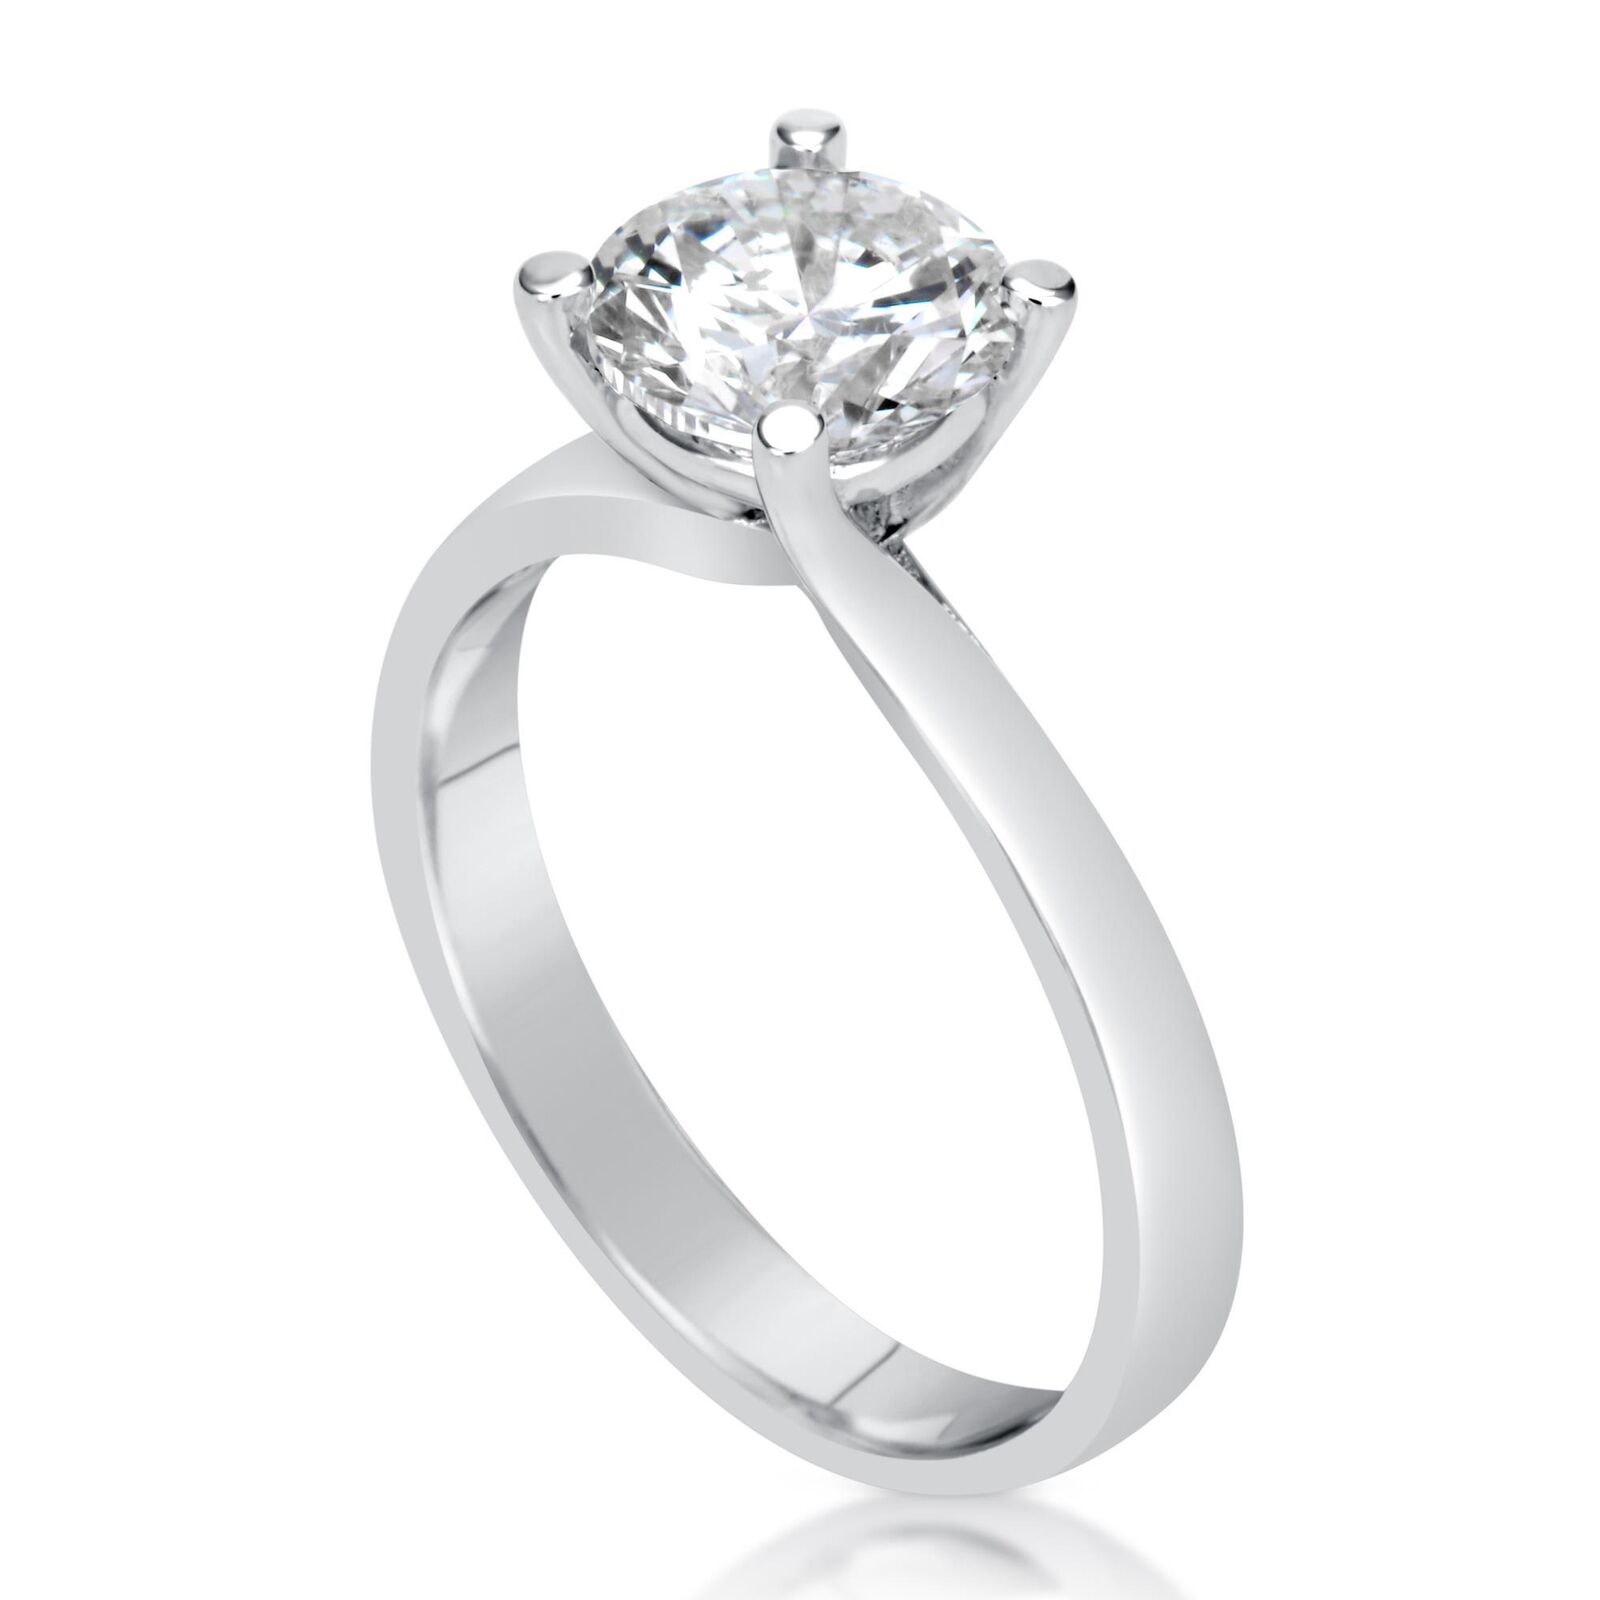 3 Ct Classic 4 Prong Round Cut Diamond Engagement Ring VVS2 F White Gold 18k